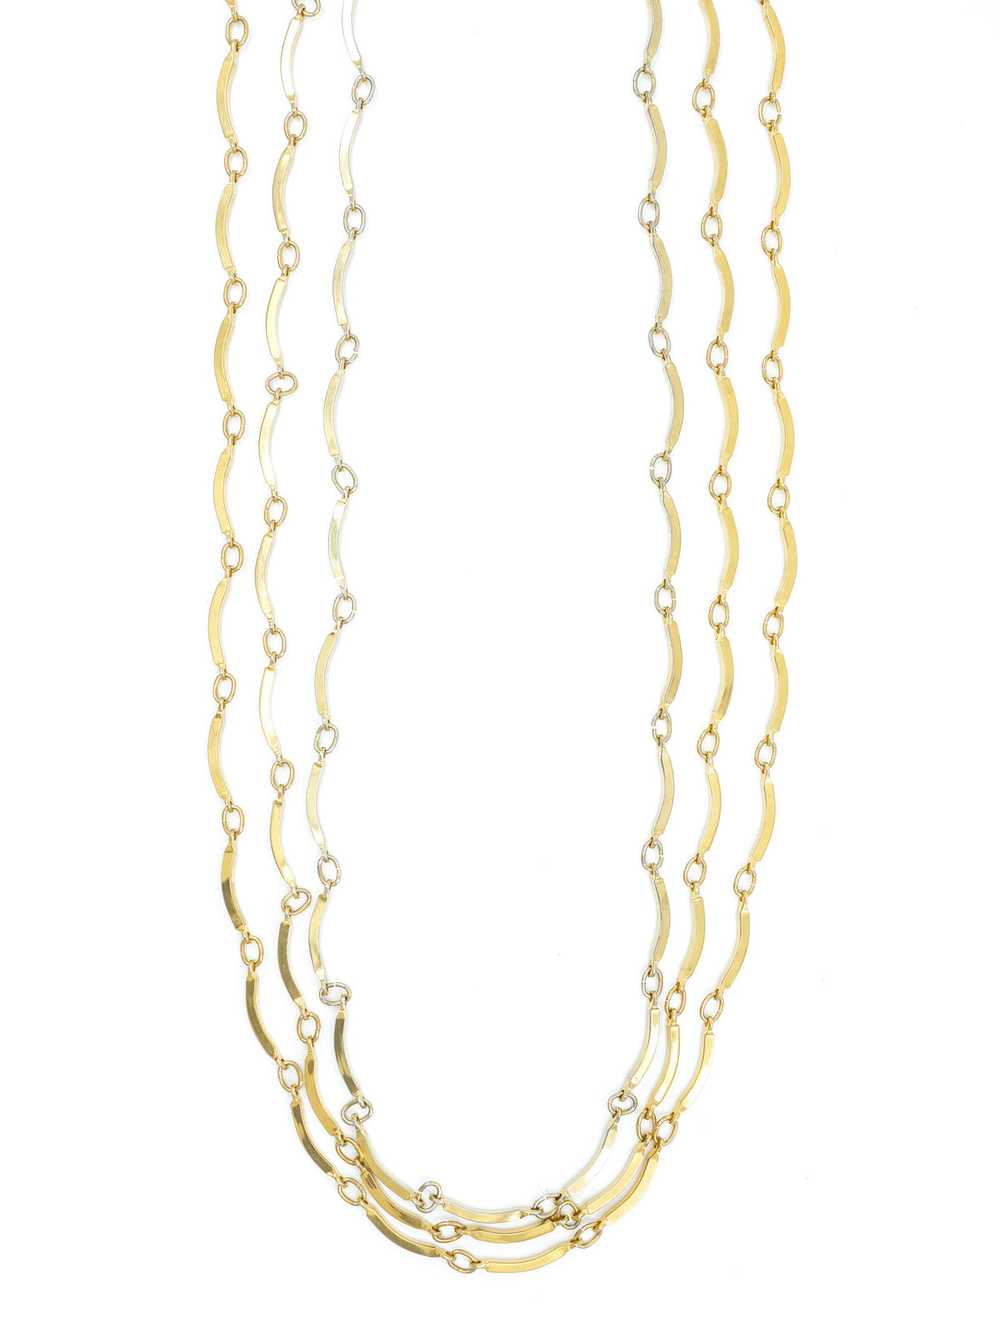 Yves Saint Laurent Three Strand Necklace - image 2